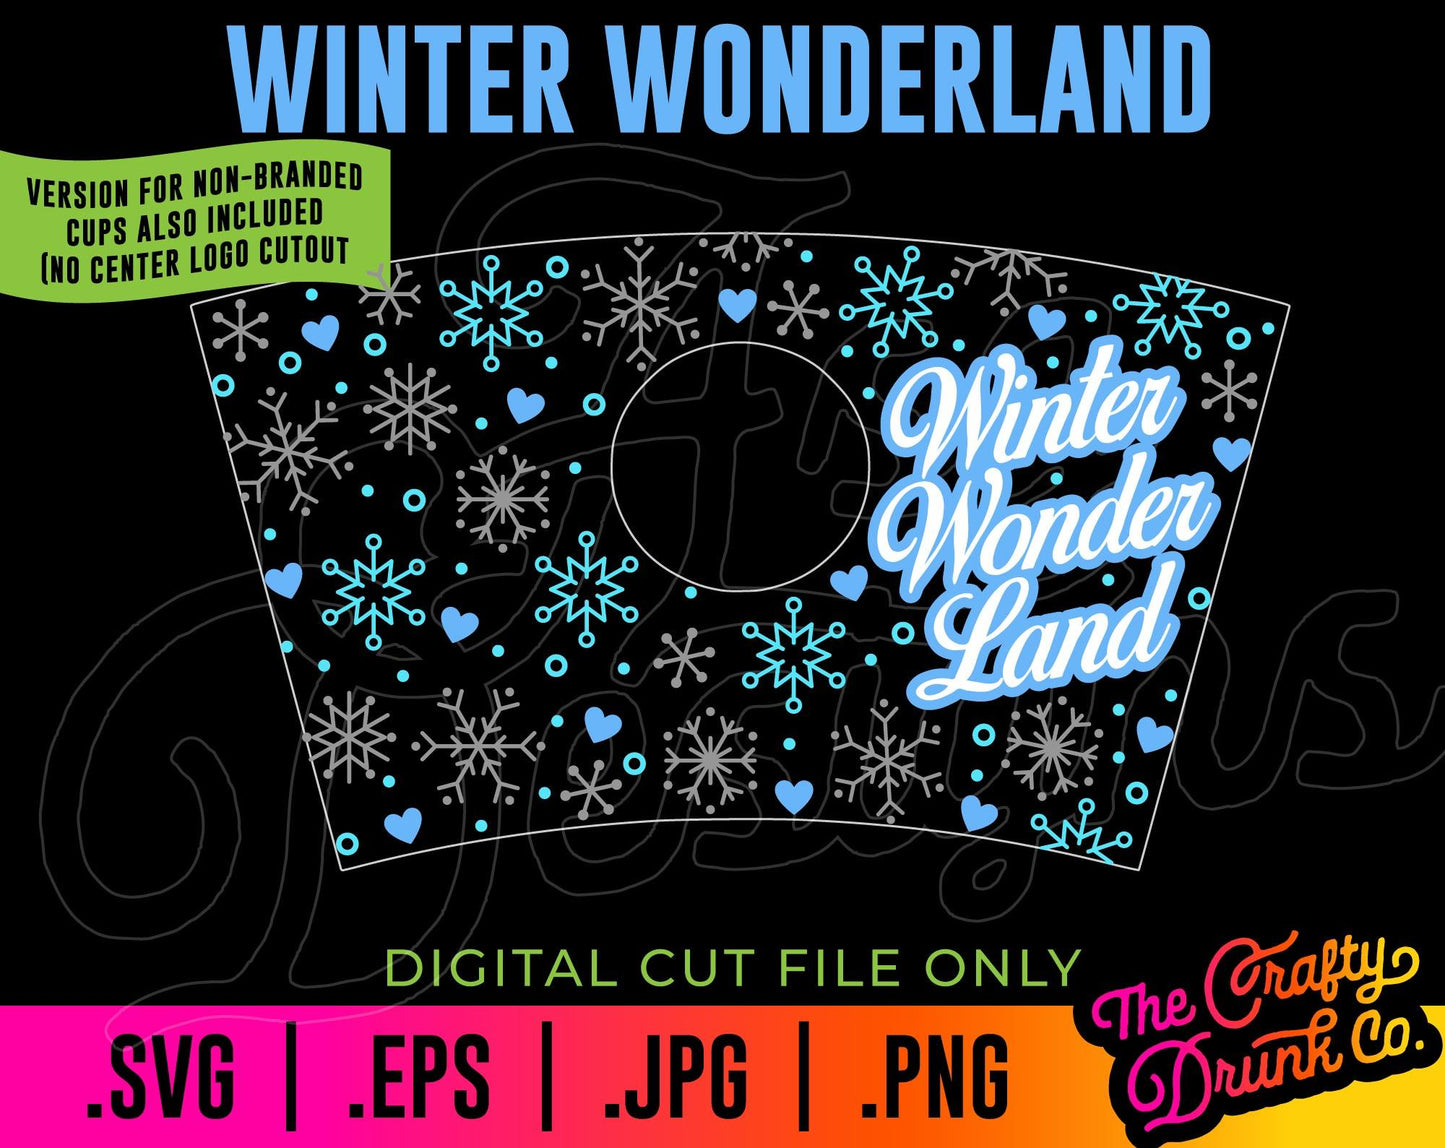 Winter Wonderland Hot Cup Wrap - TheCraftyDrunkCo